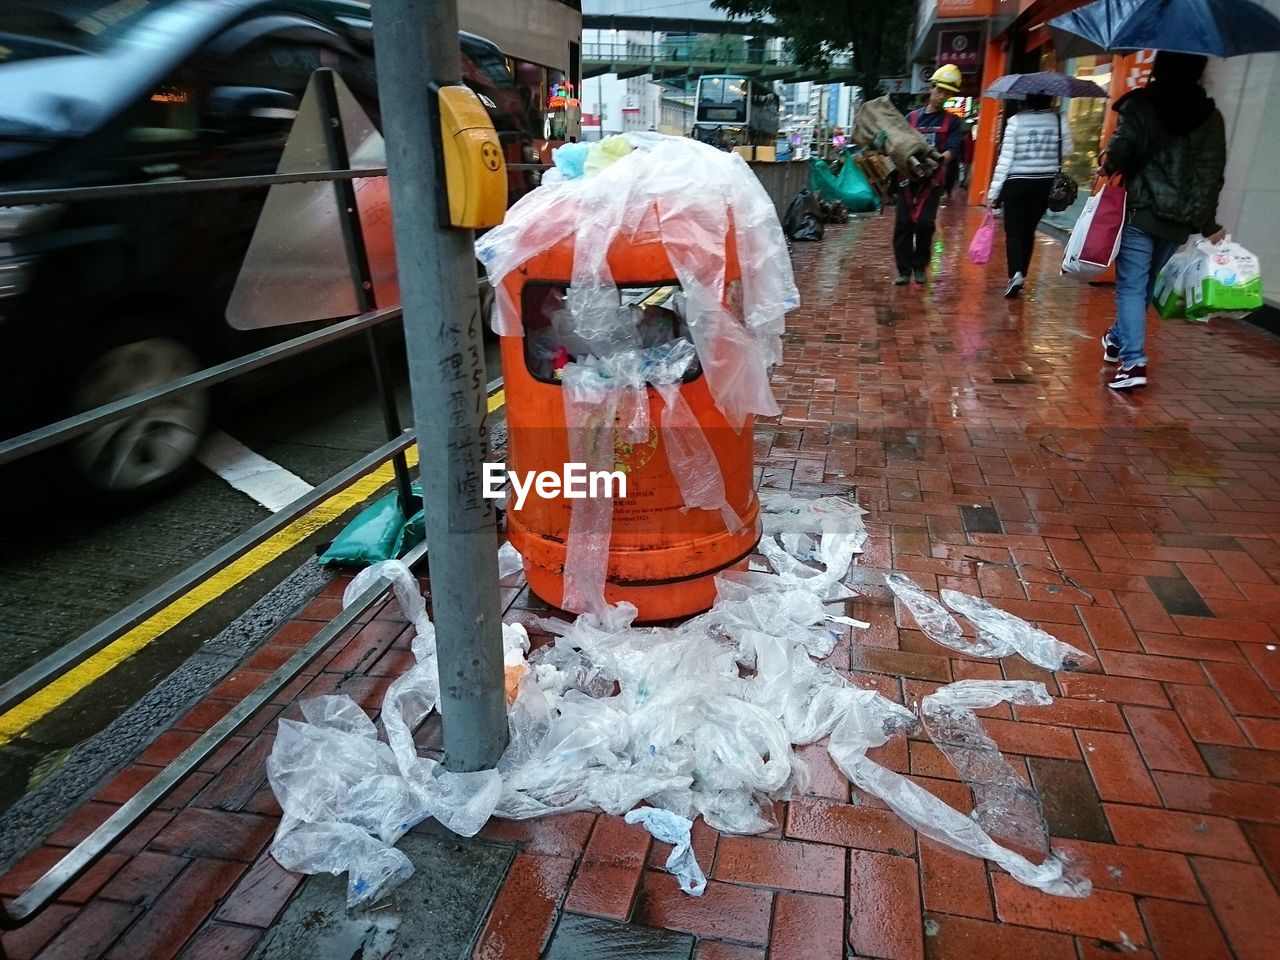 People walking by garbage bin with plastic bags on street during monsoon